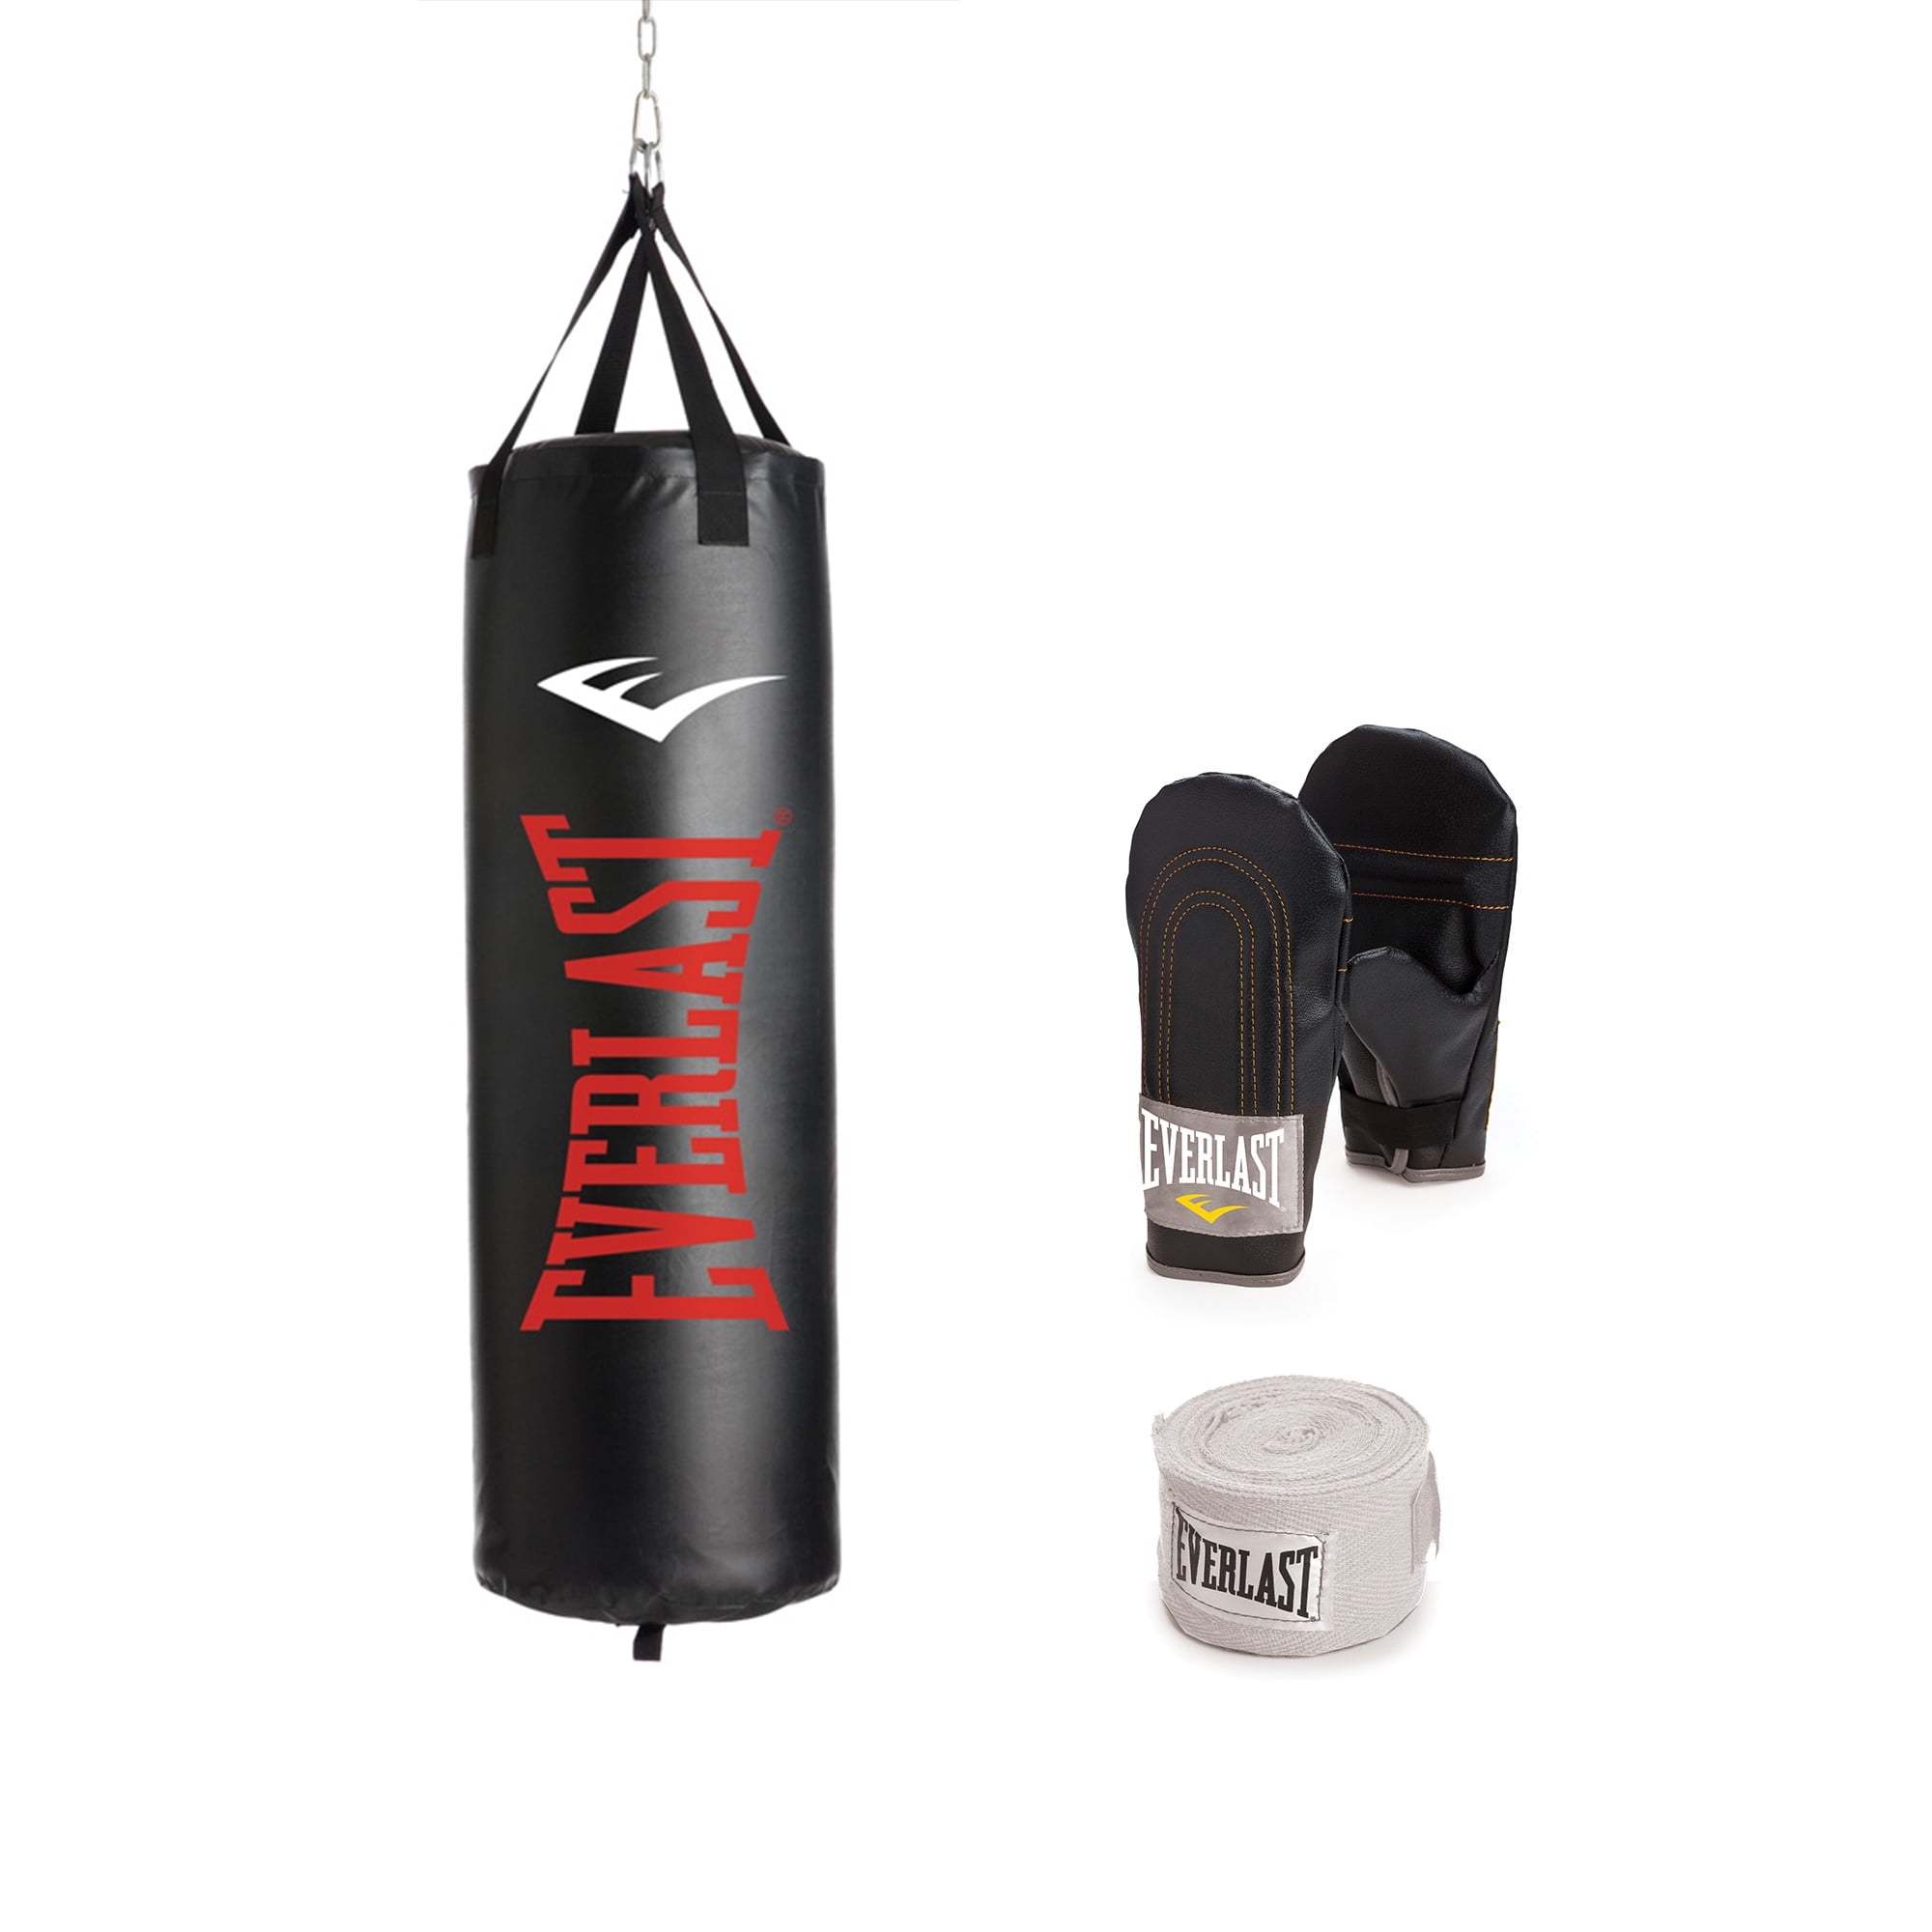 Everlast 100 lb Heavy Bag Kit With Single-Station Stand Value Bundle Gloves Wrap 